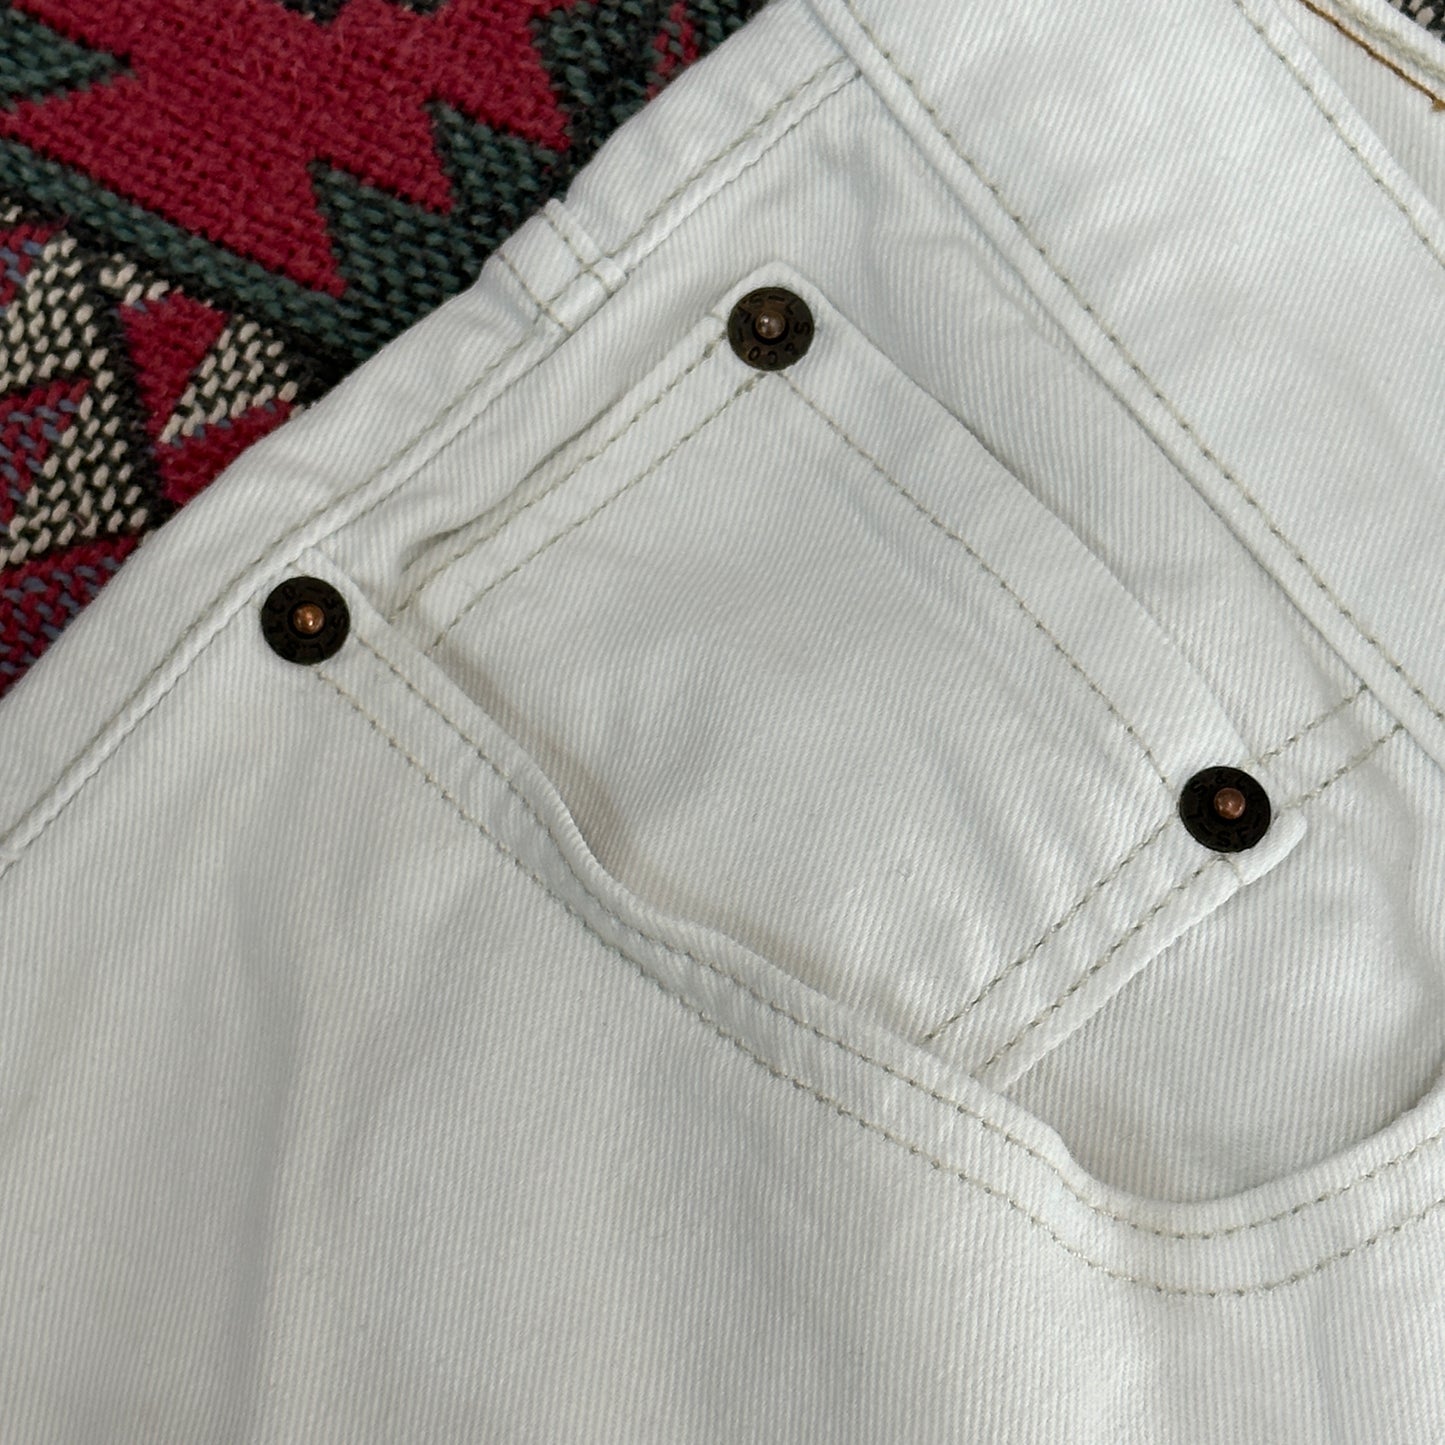 Levi's 569 White Jeans Short